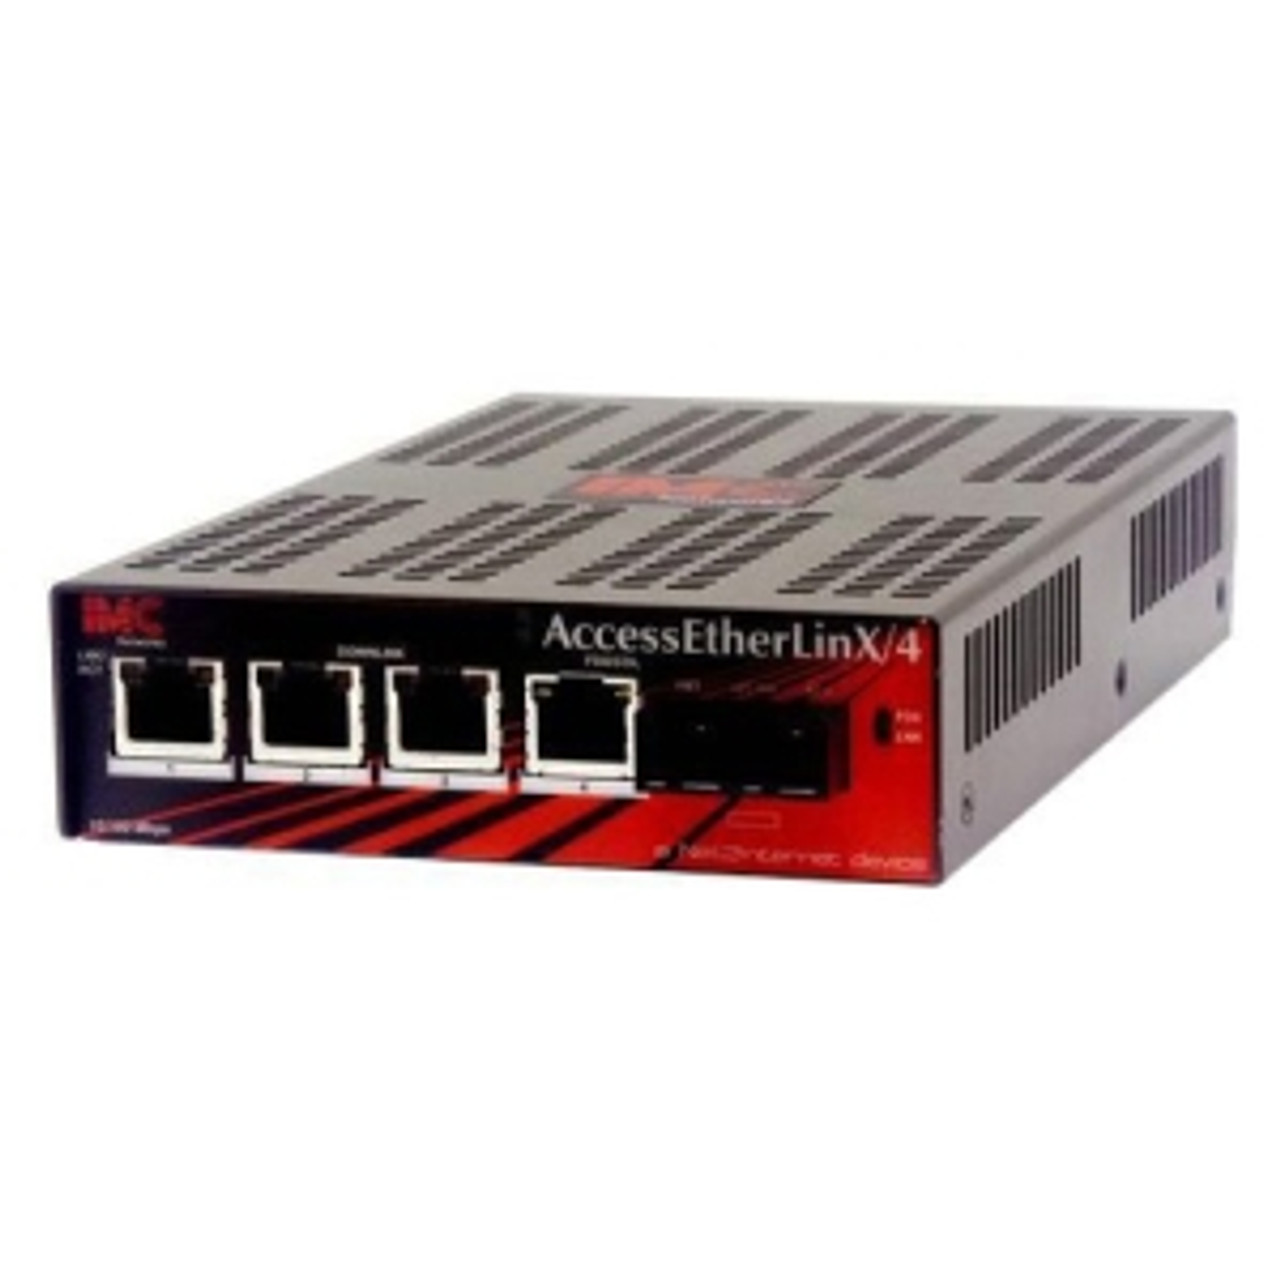 852-10085 IMC AccessEtherLinX/4 852-10085 Ethernet Switch 5 Ports Manageable 4 x RJ-45 1 x SC 10/100Base-TX, 100Base-FX